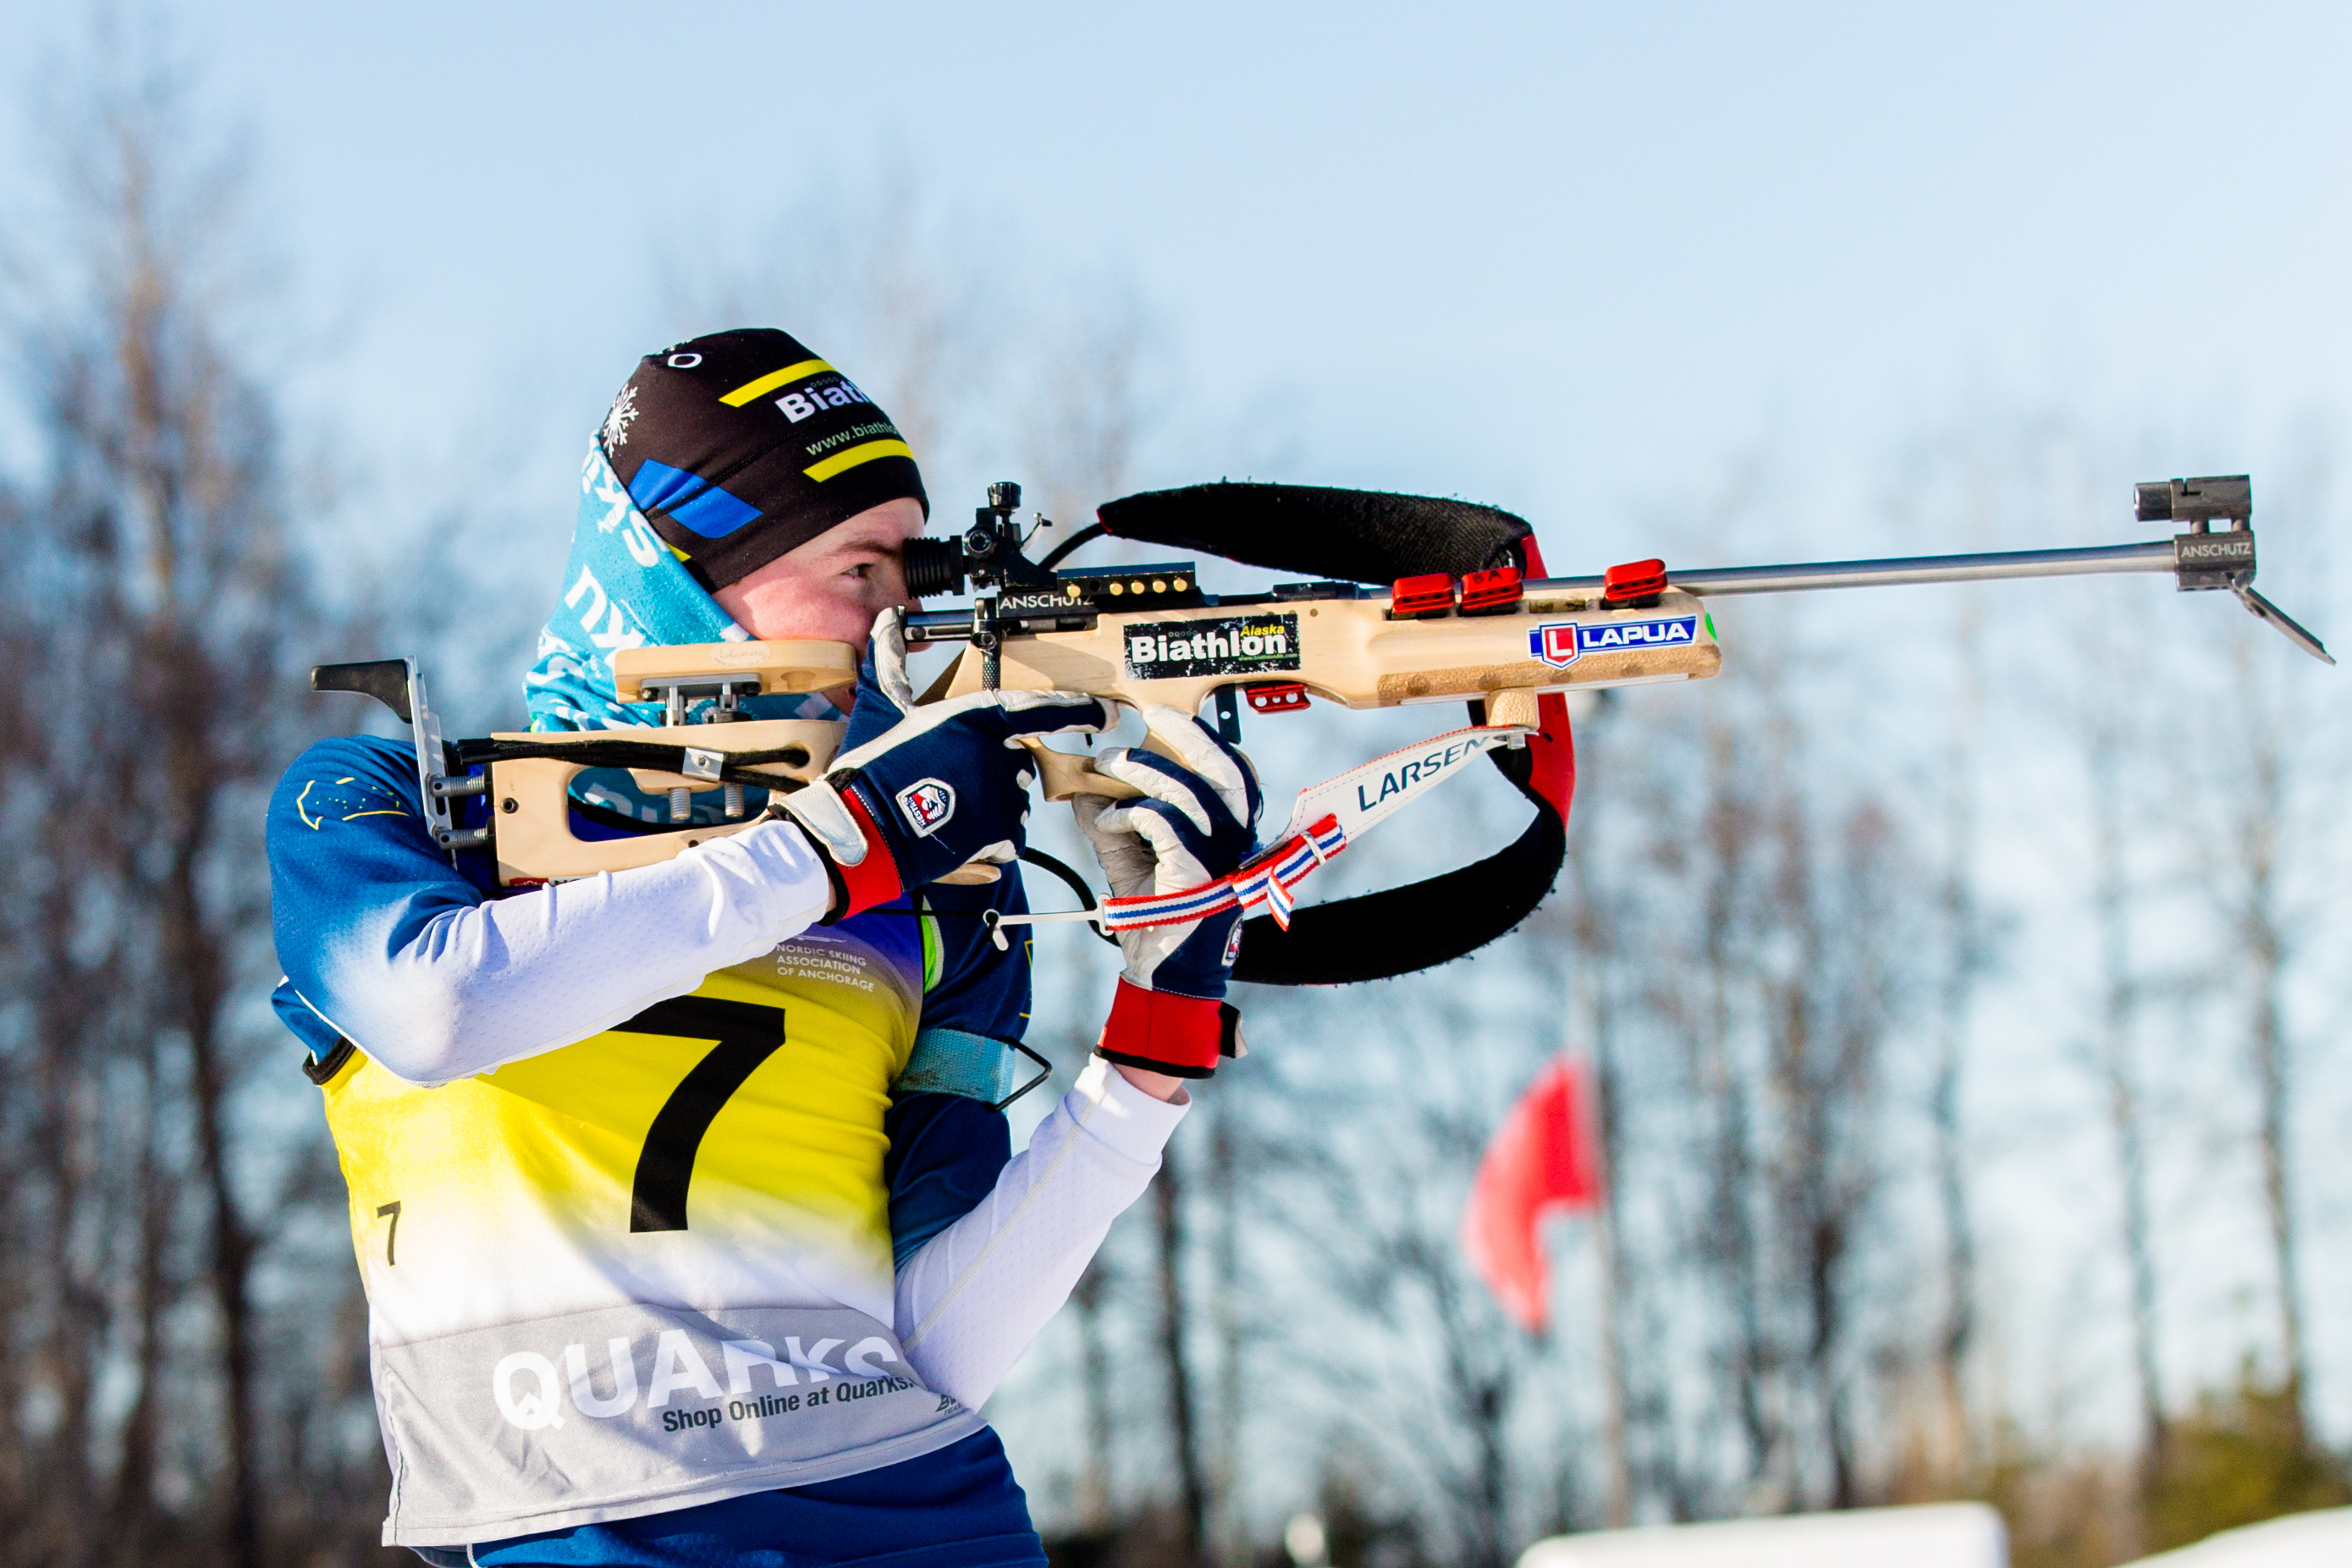 Nordic Marksman - Biathlon, Nordic Sports and Target Shooting